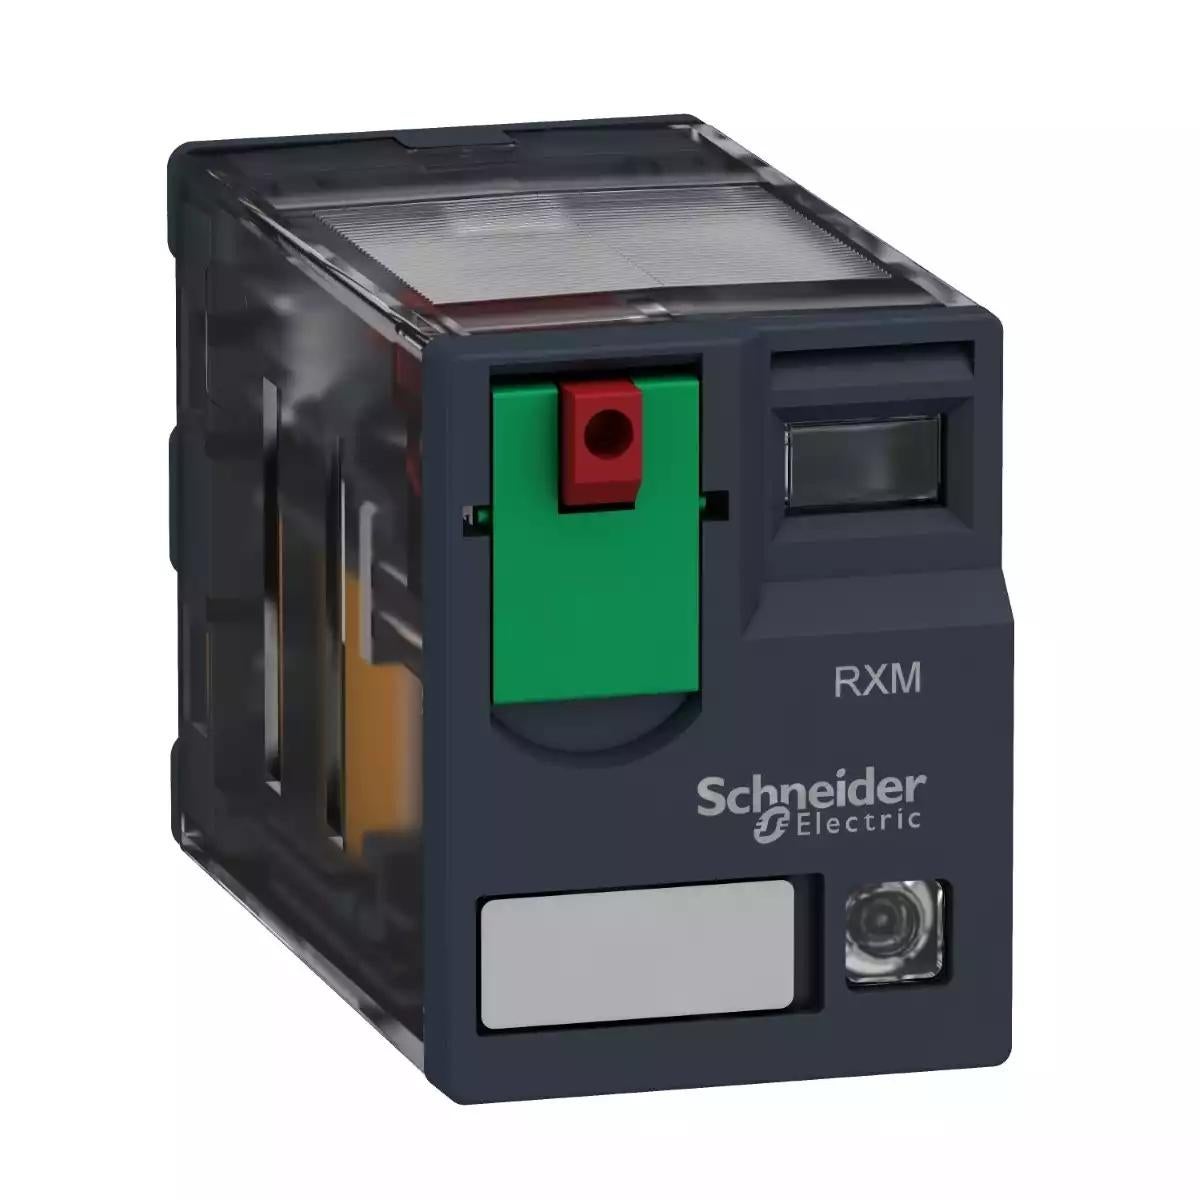 Schneider Electric Zelio RXM - Relay Miniature Plug-in relay 4 C/O 230 V AC 6 A with LED